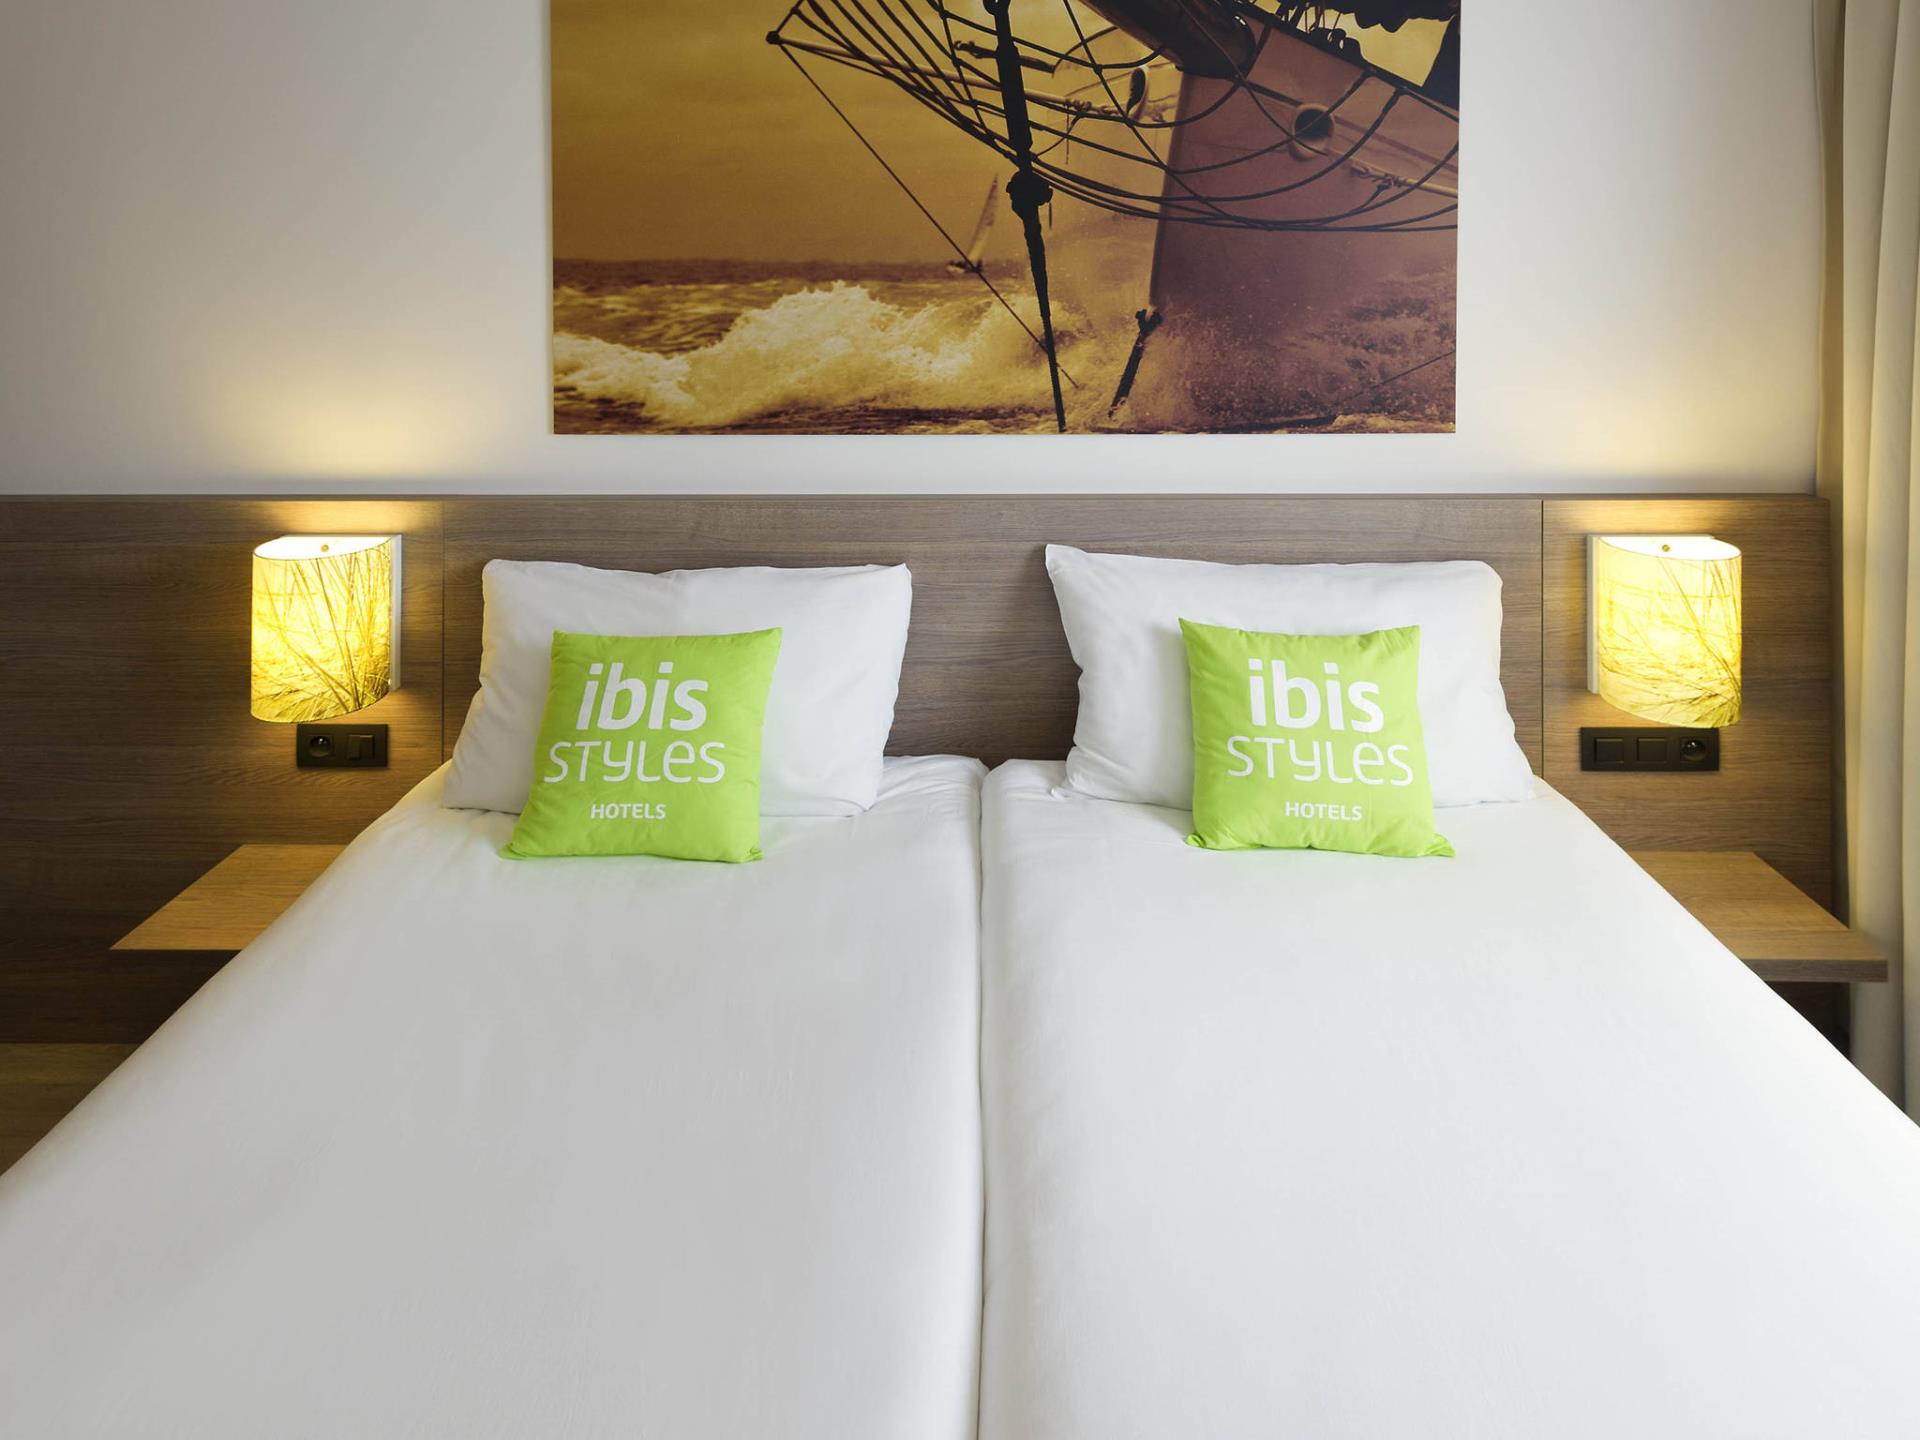 Hotel Ibis Styles Zeebrugge